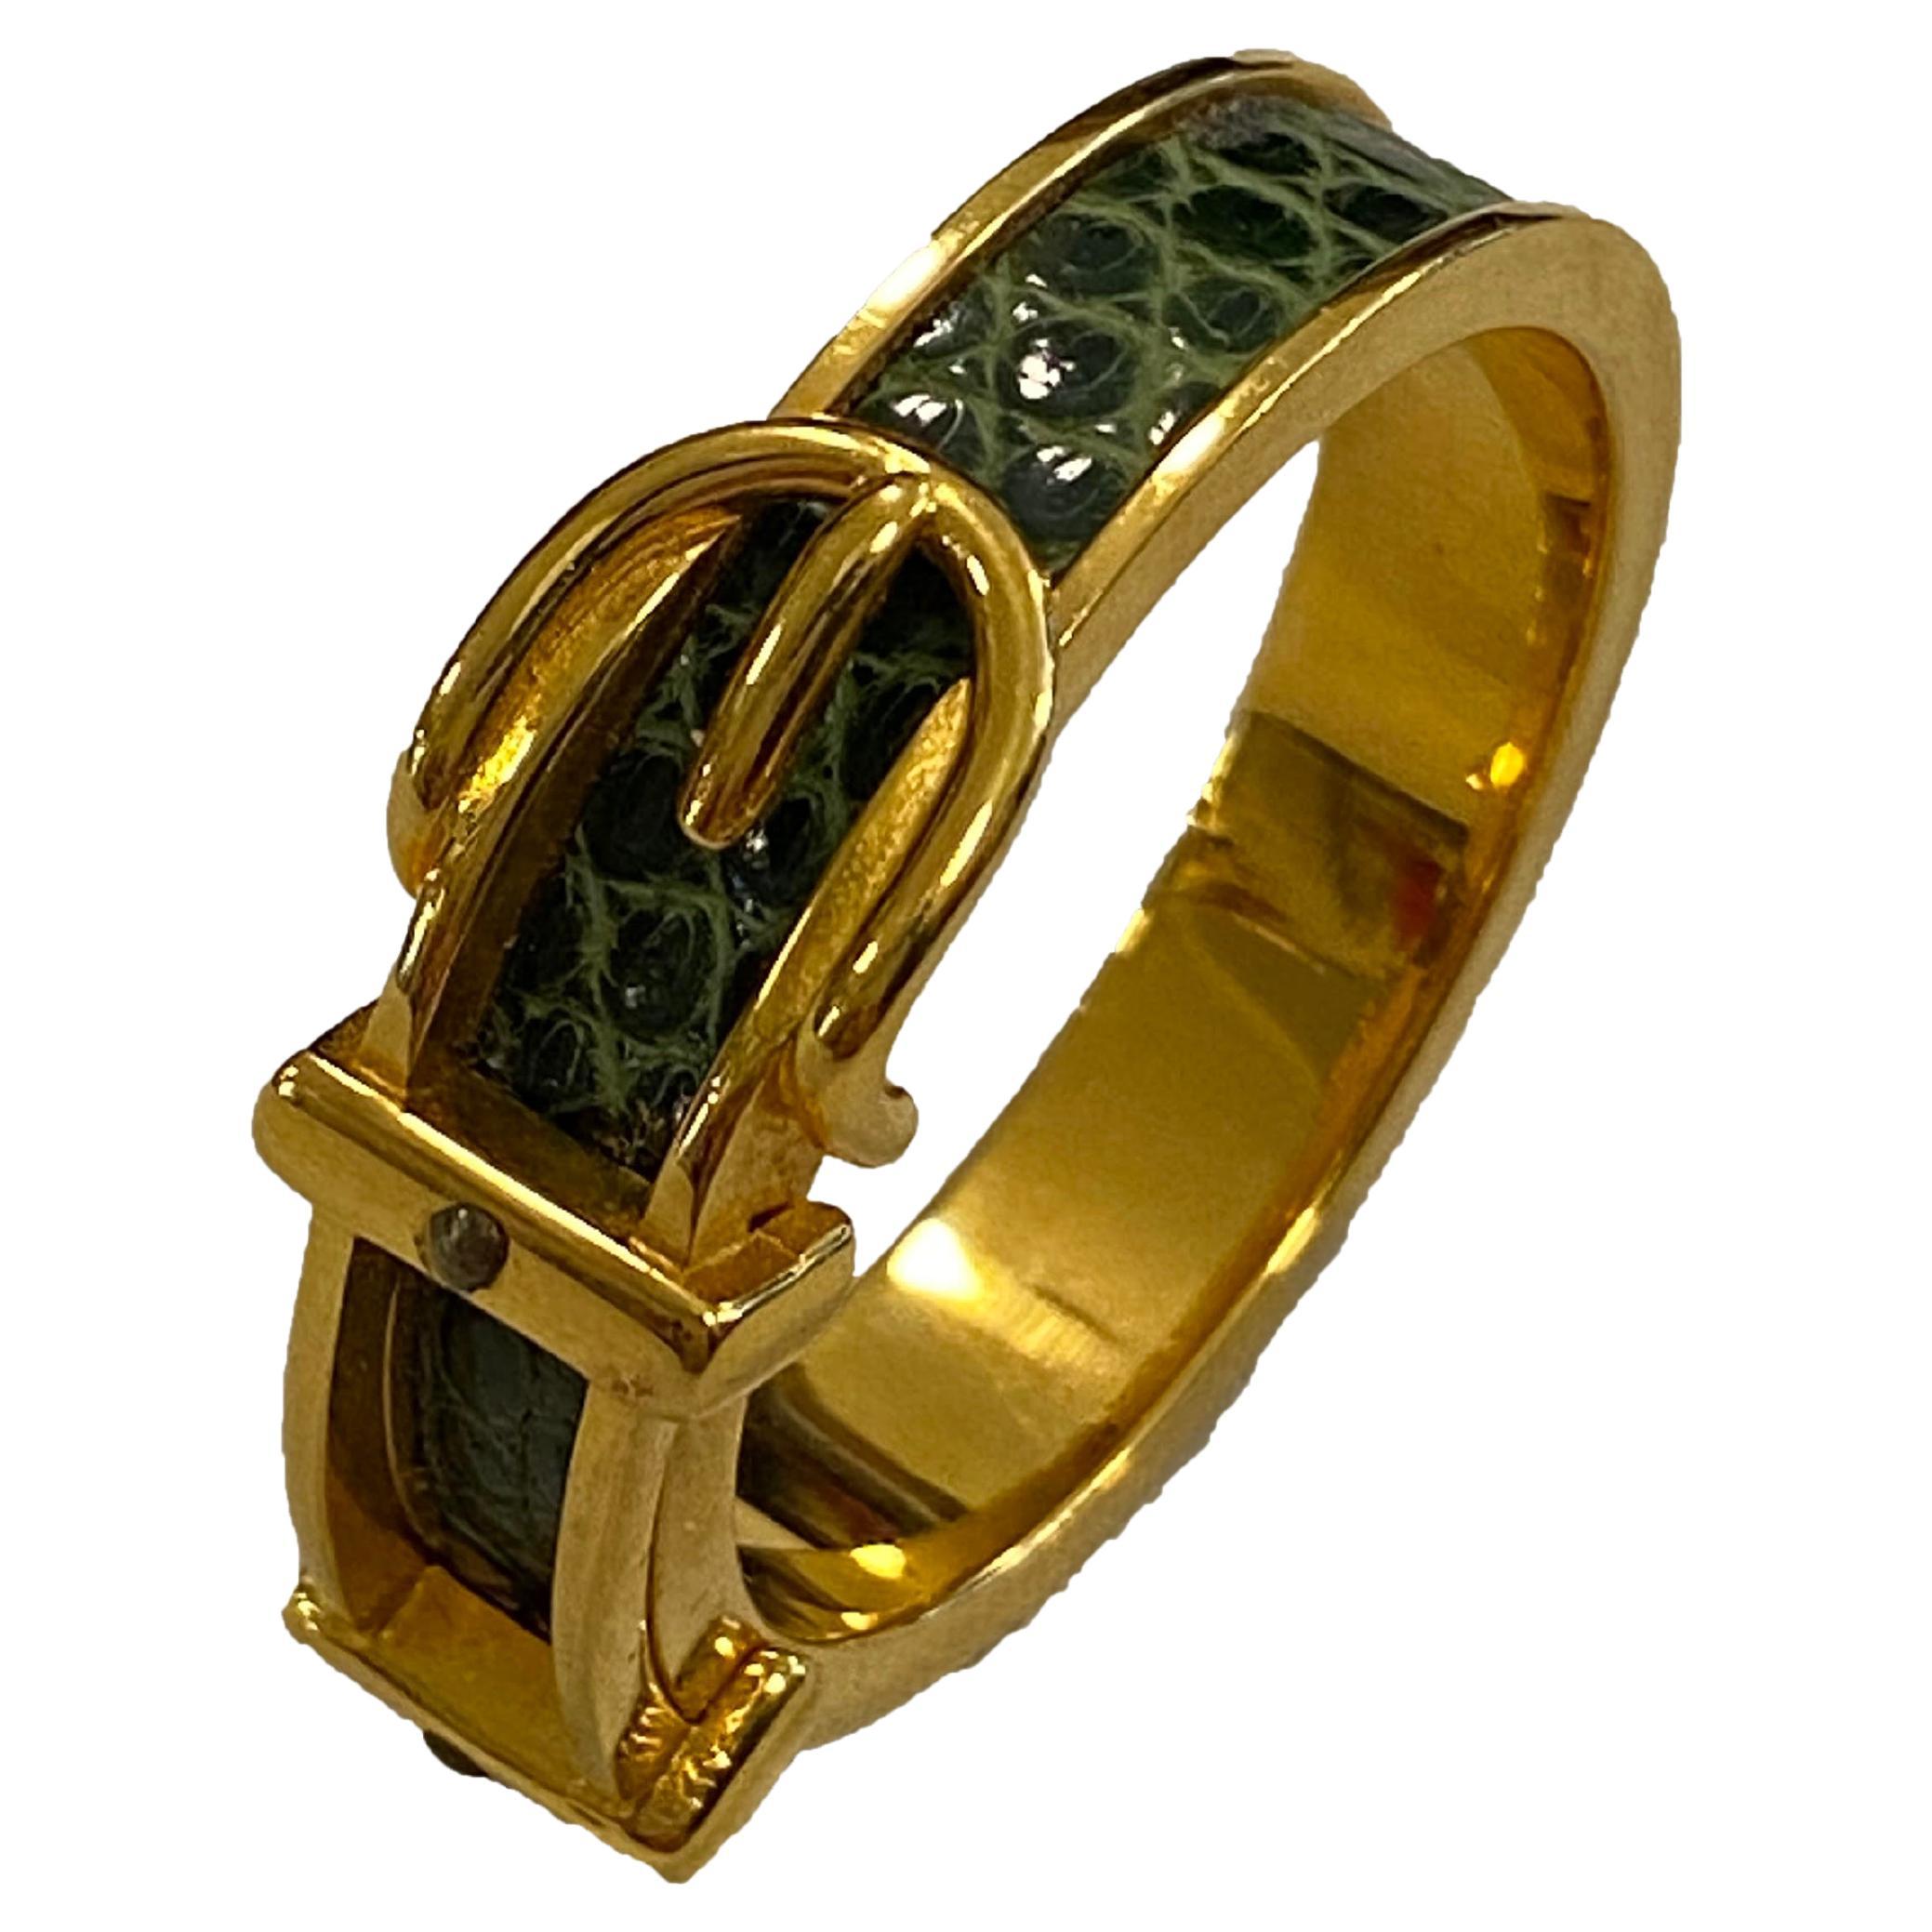 Hermes Belt Style Scarf Ring